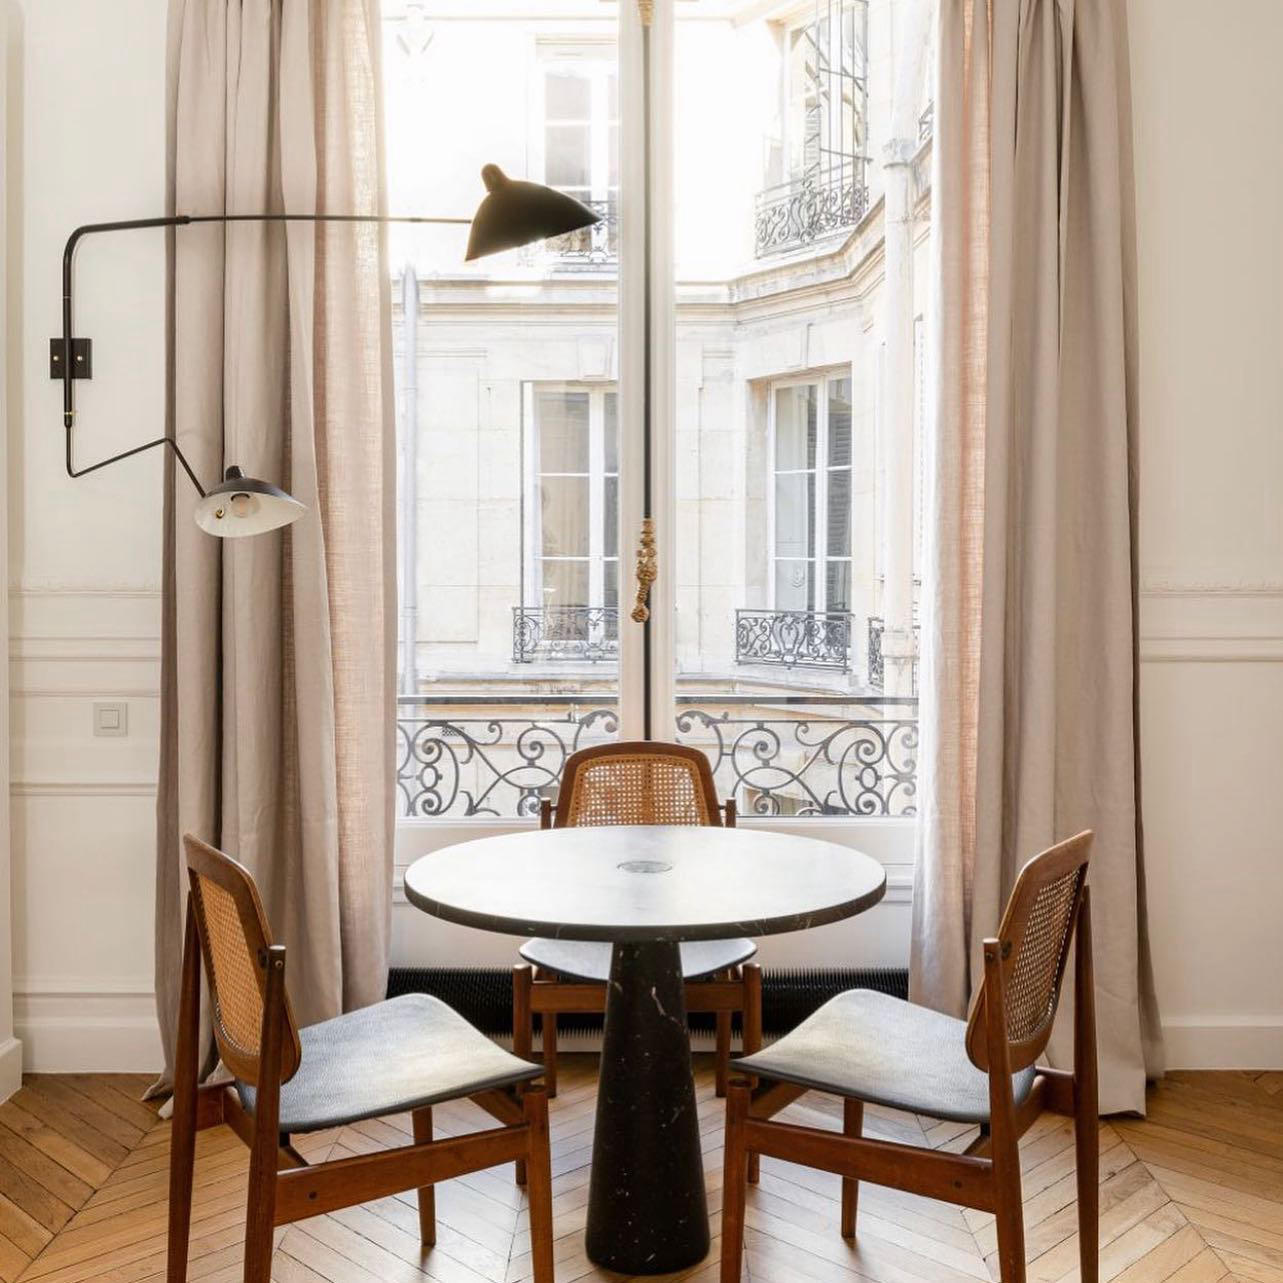 Parisian Interior Inspiration - The warm colors